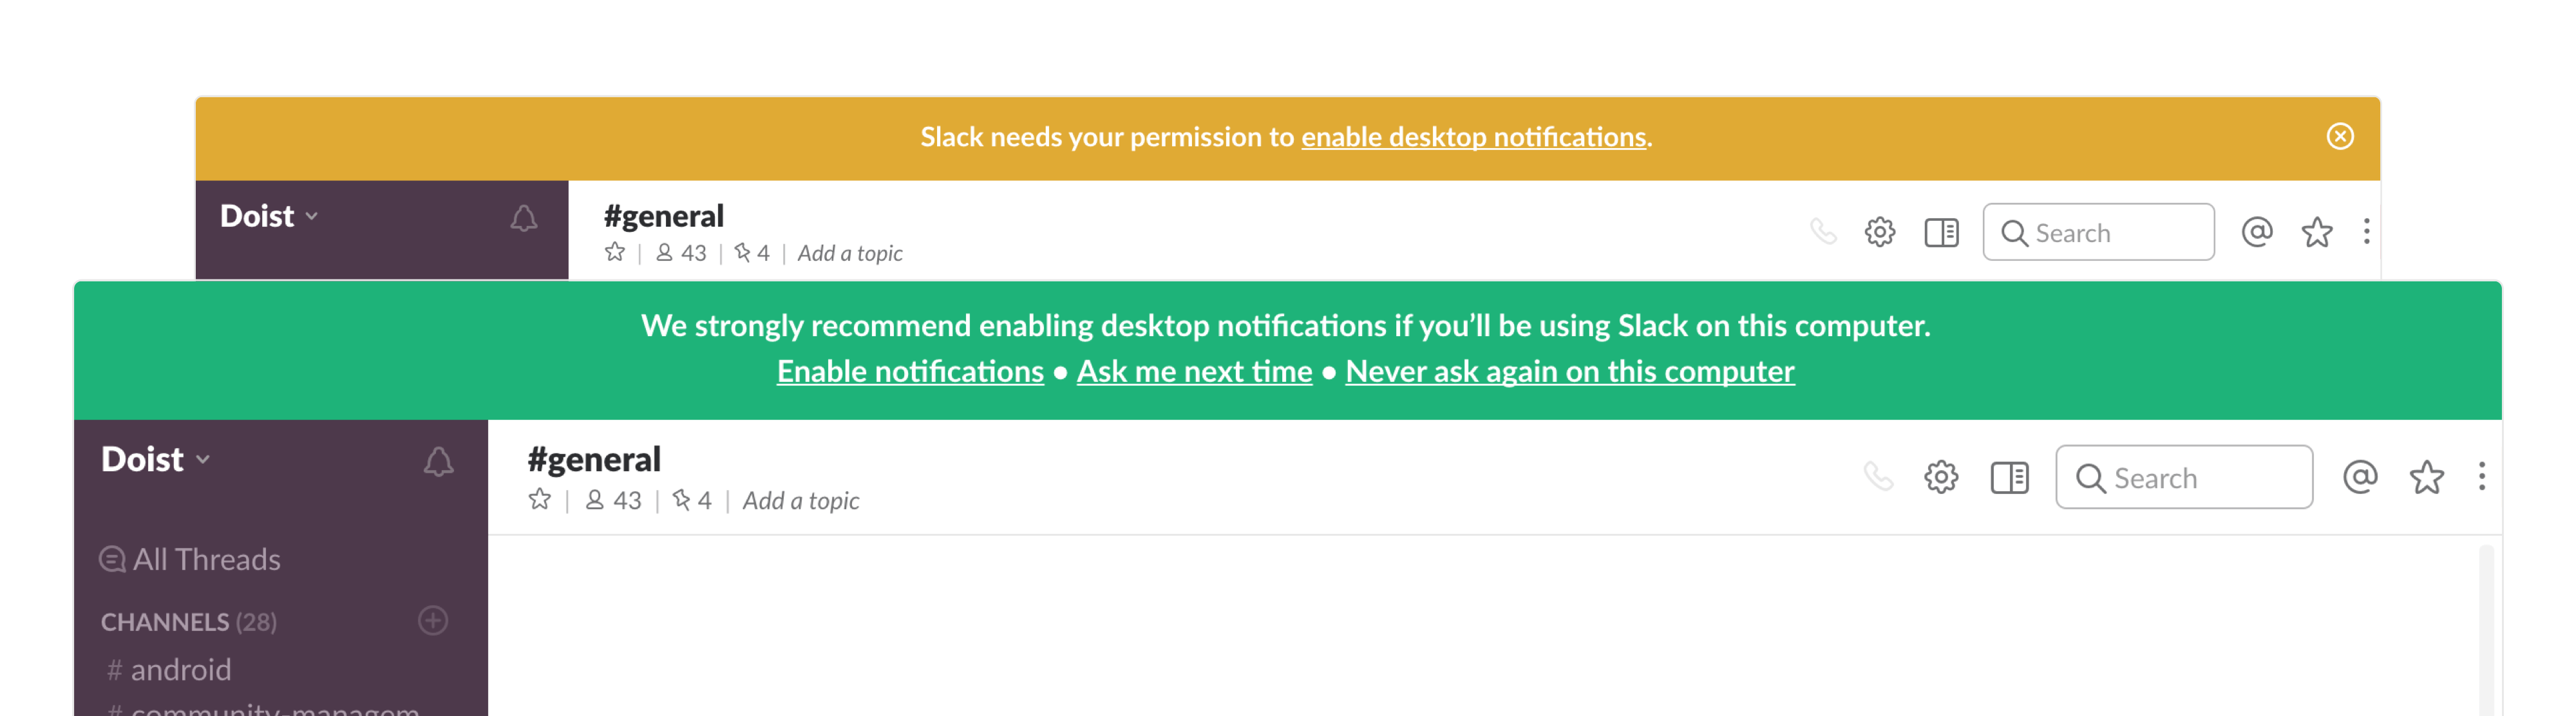 slack notifications